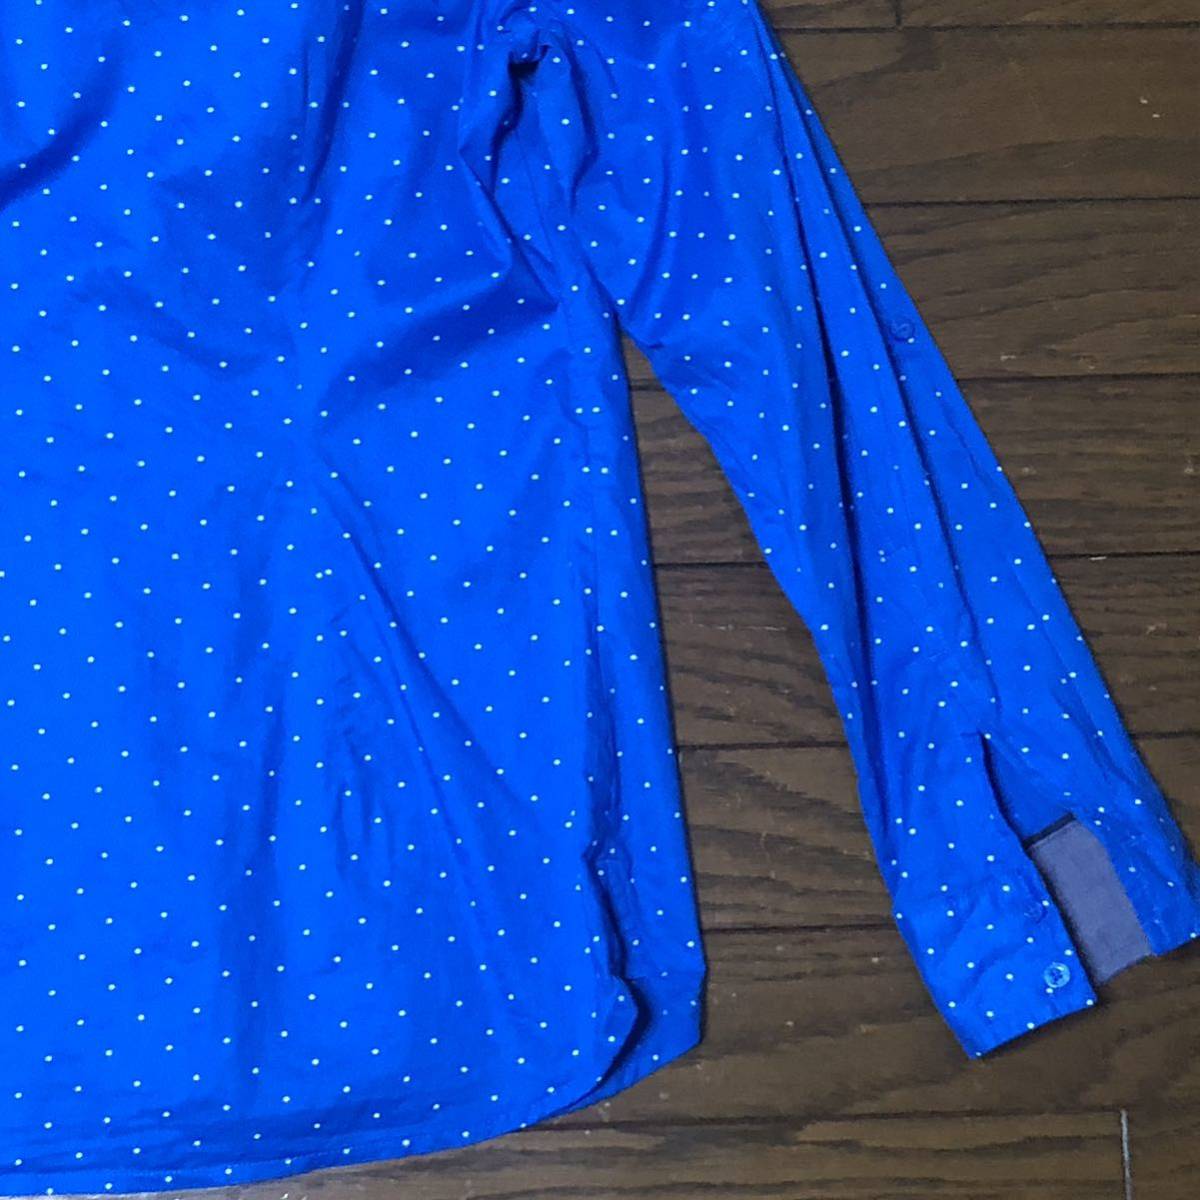 [ free shipping ]TOMMY HILFIGER long sleeve shirt blue white dot pattern lady's M size Tommy Hilfiger polka dot 